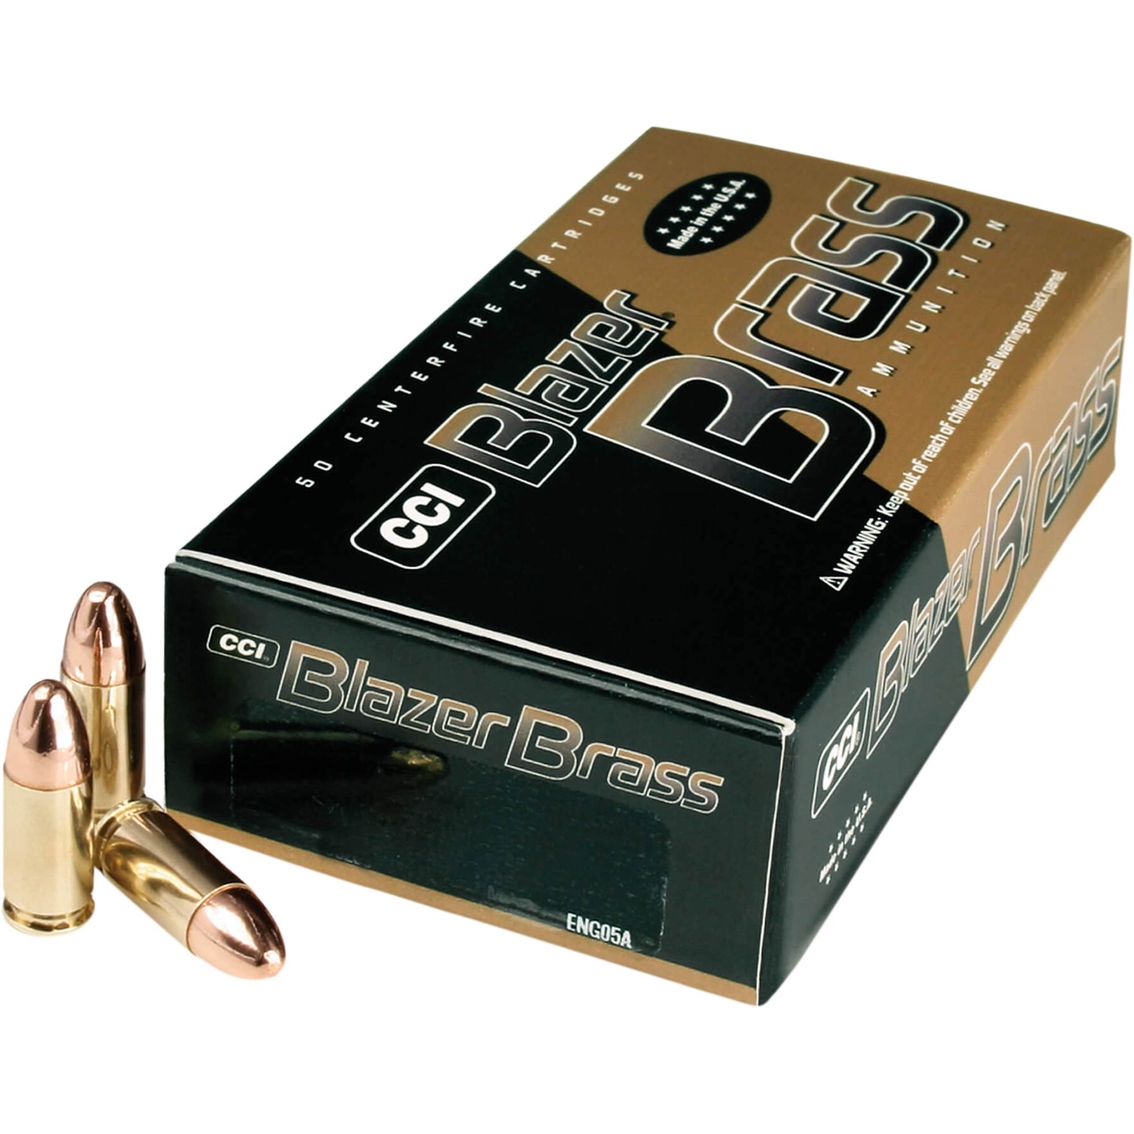 cci-speer-blazer-brass-9mm-115-gr-fmj-50-rounds-handgun-ammunition